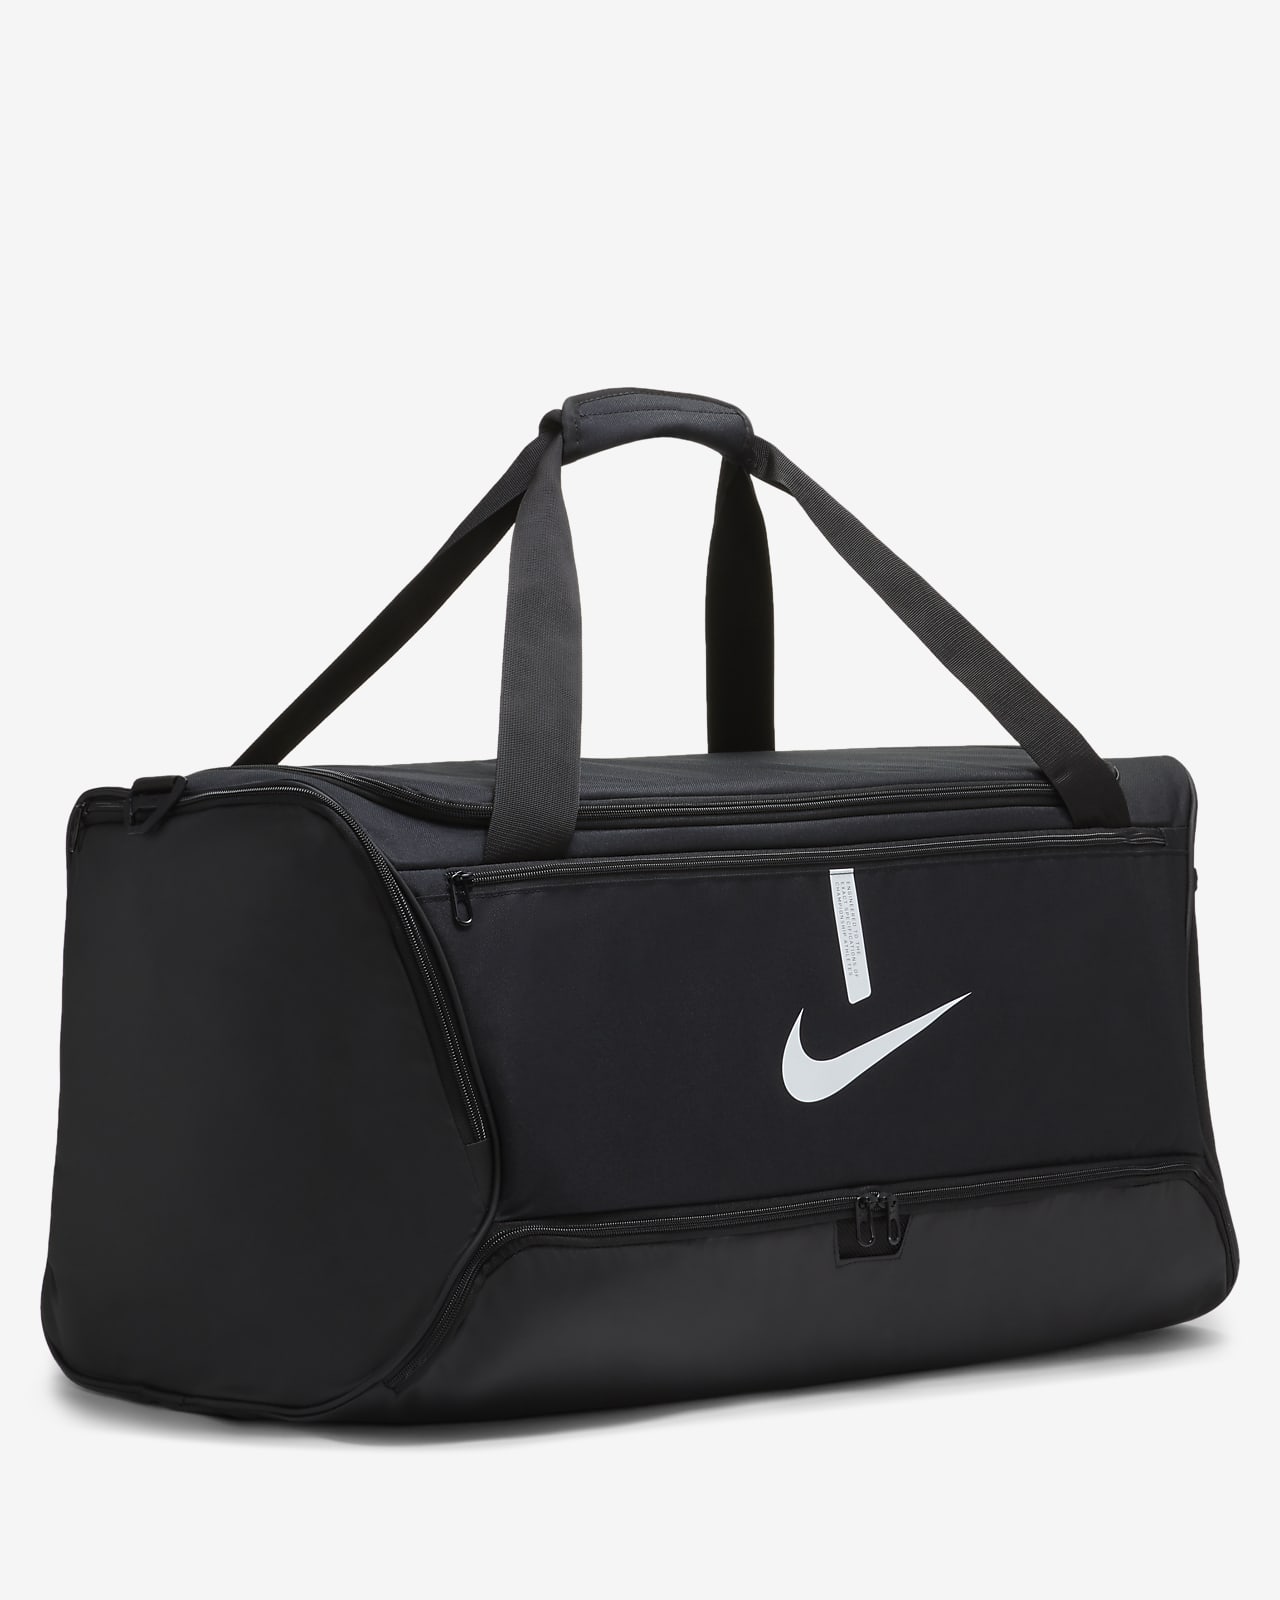 Nike Brasilia 9.5 Training Duffel Bag (Large, 95L). Nike IN